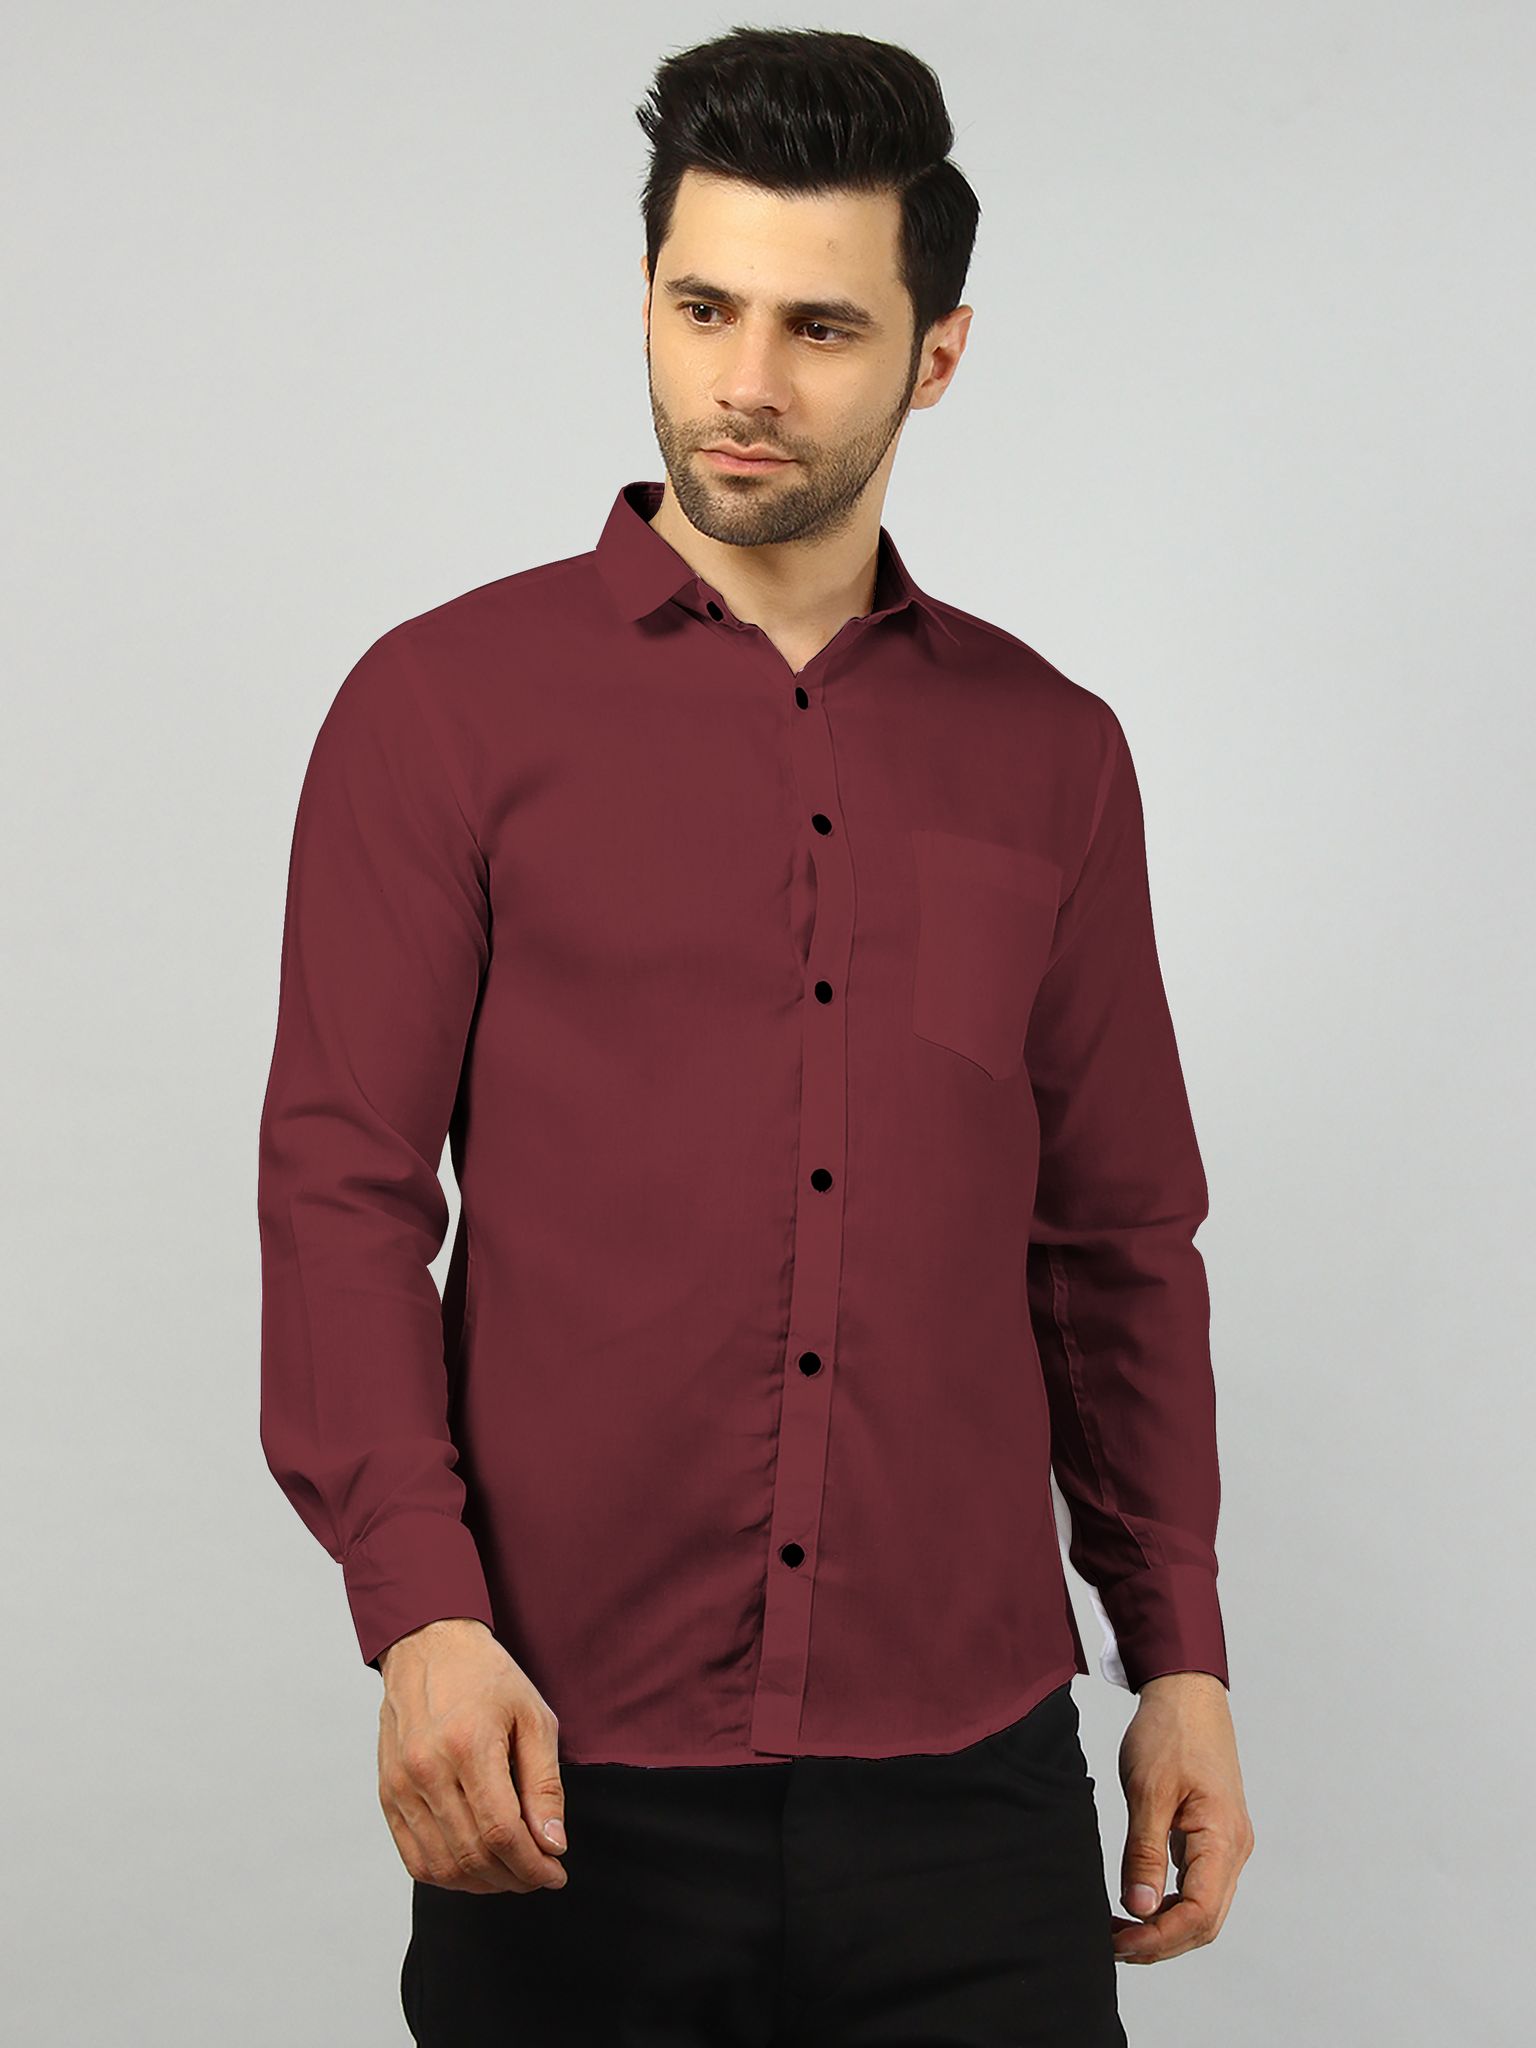 Casual Shirt for Men Full sleeves Maroon